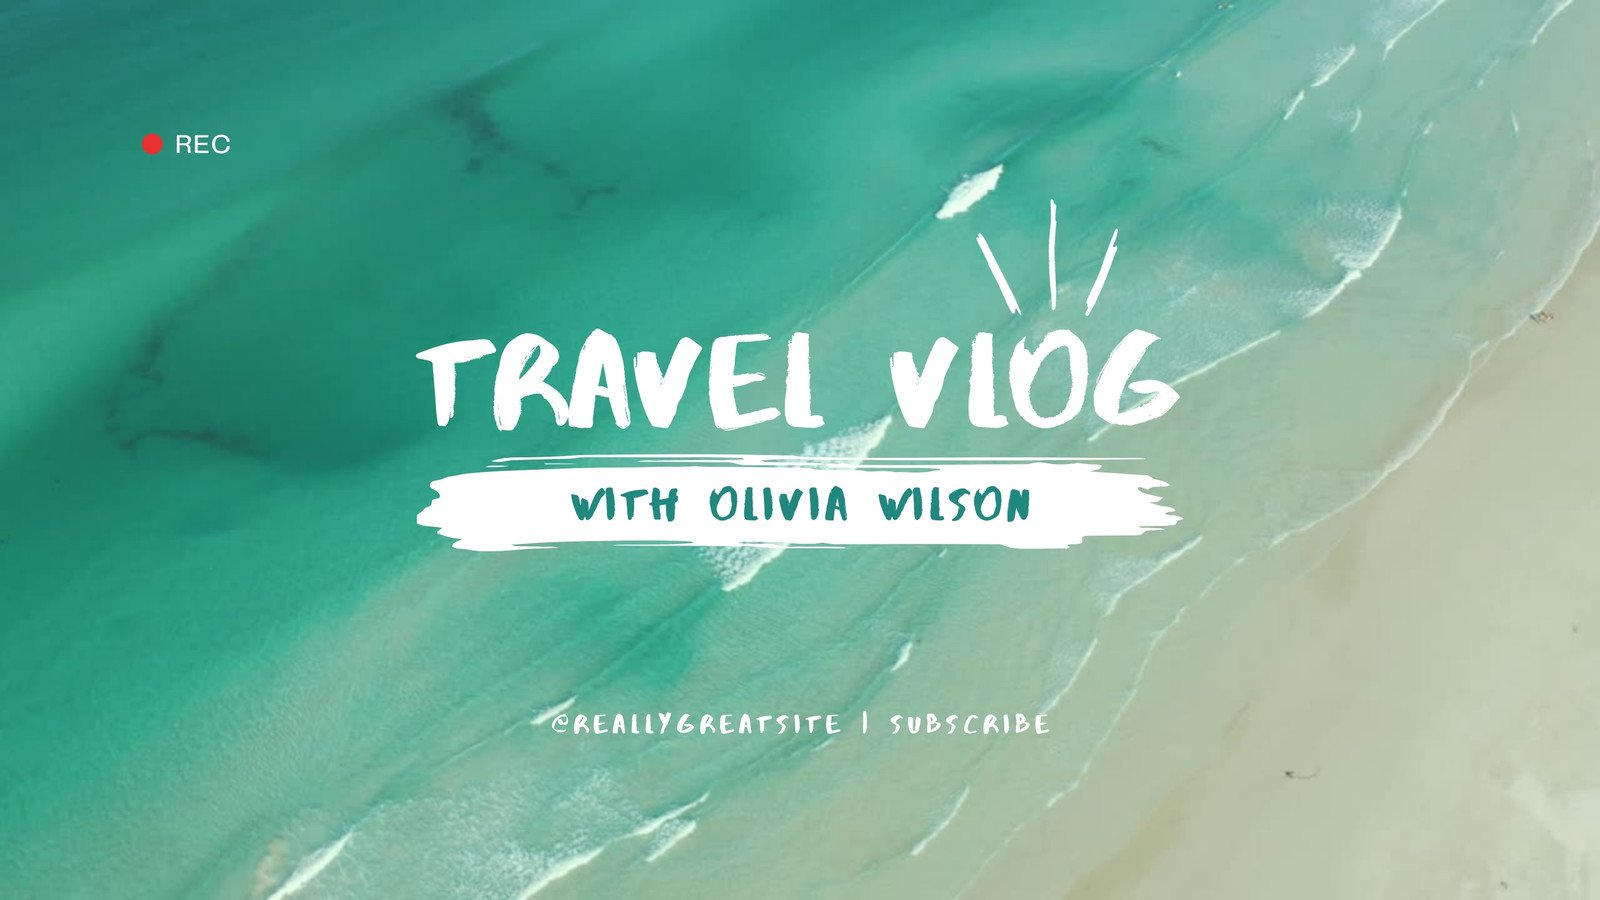 Free, customizable, stunning travel video templates | Canva